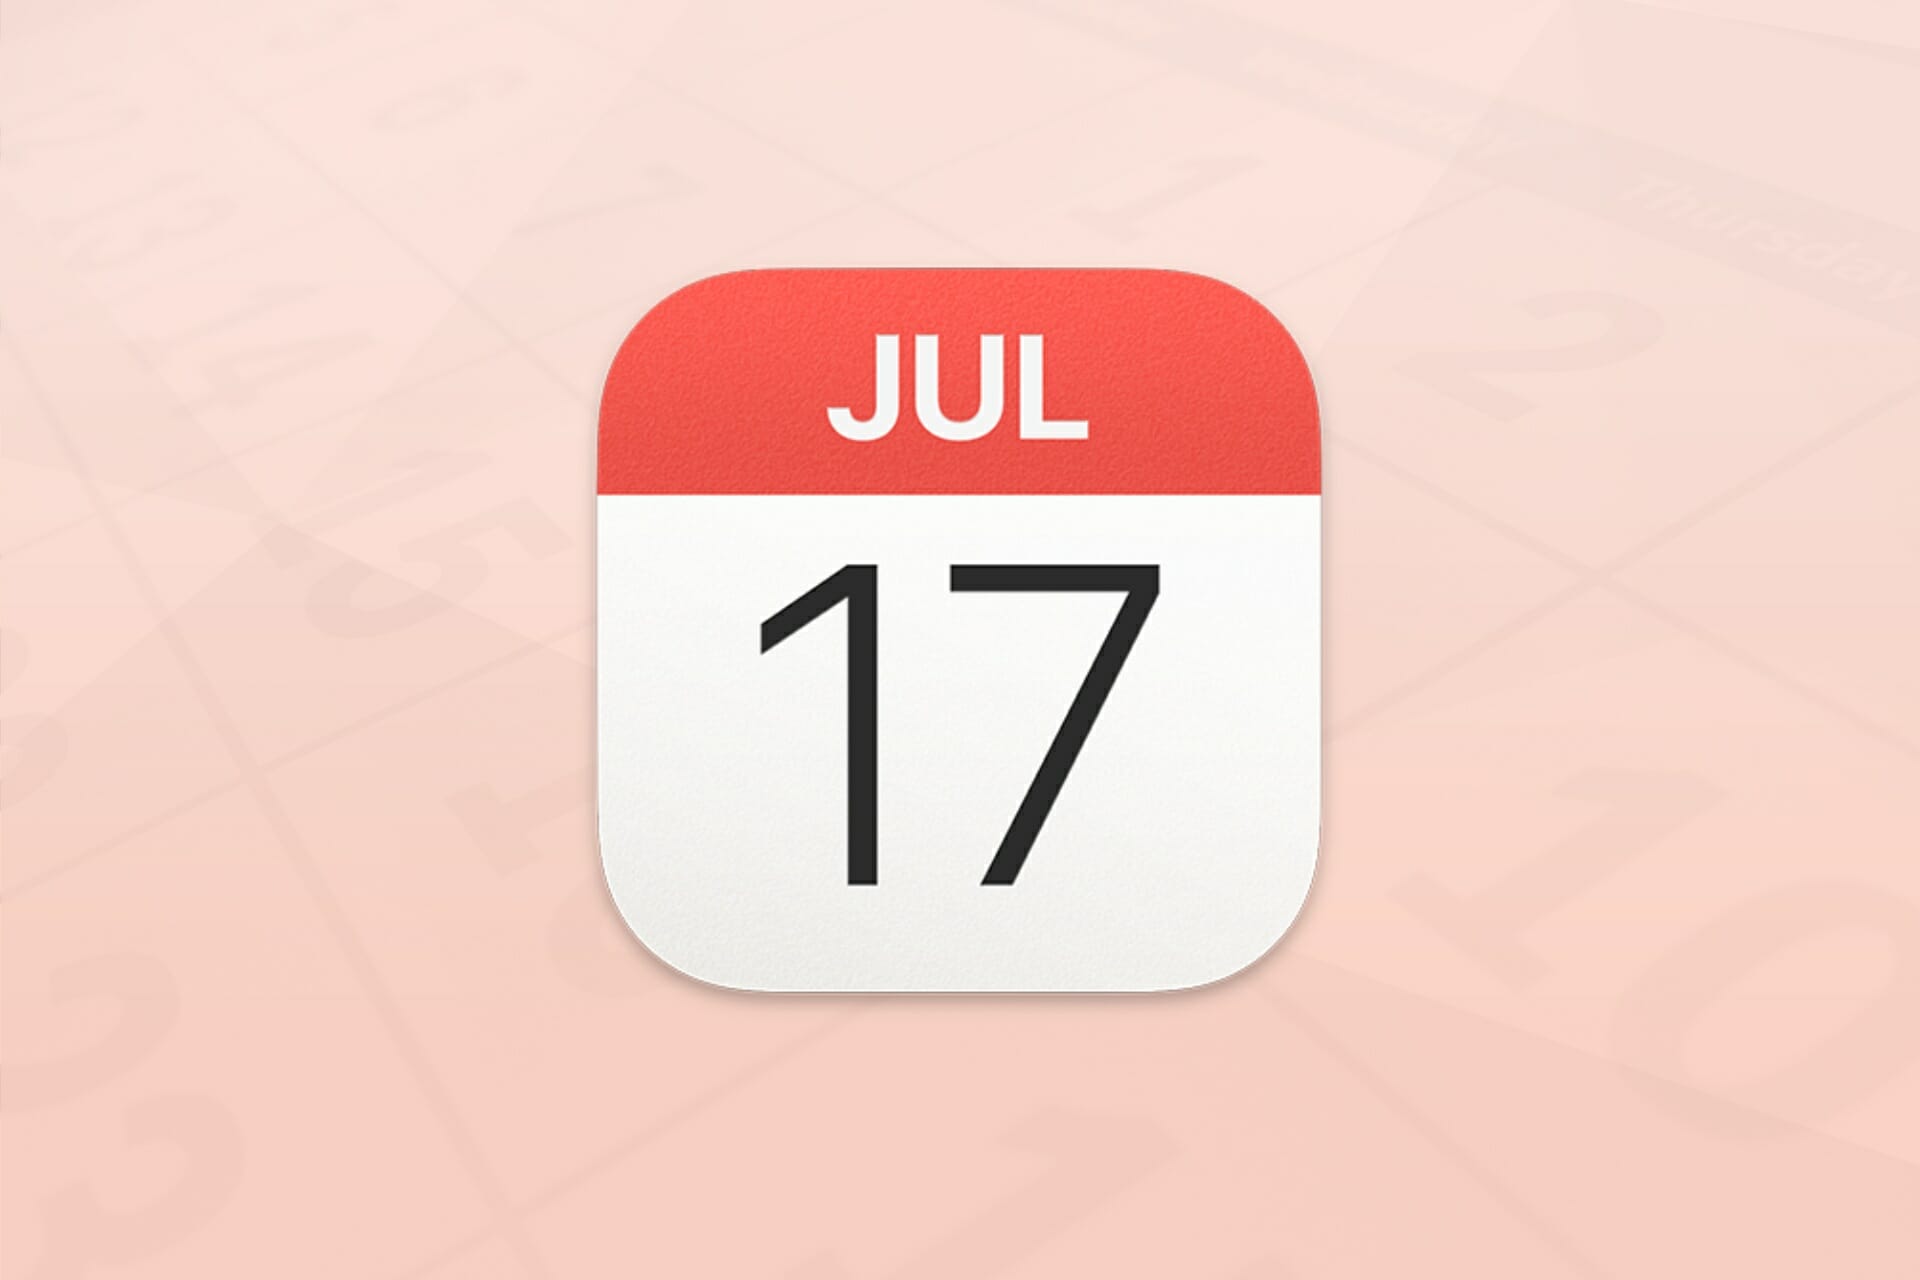 access apple calendar on windows 10 pc